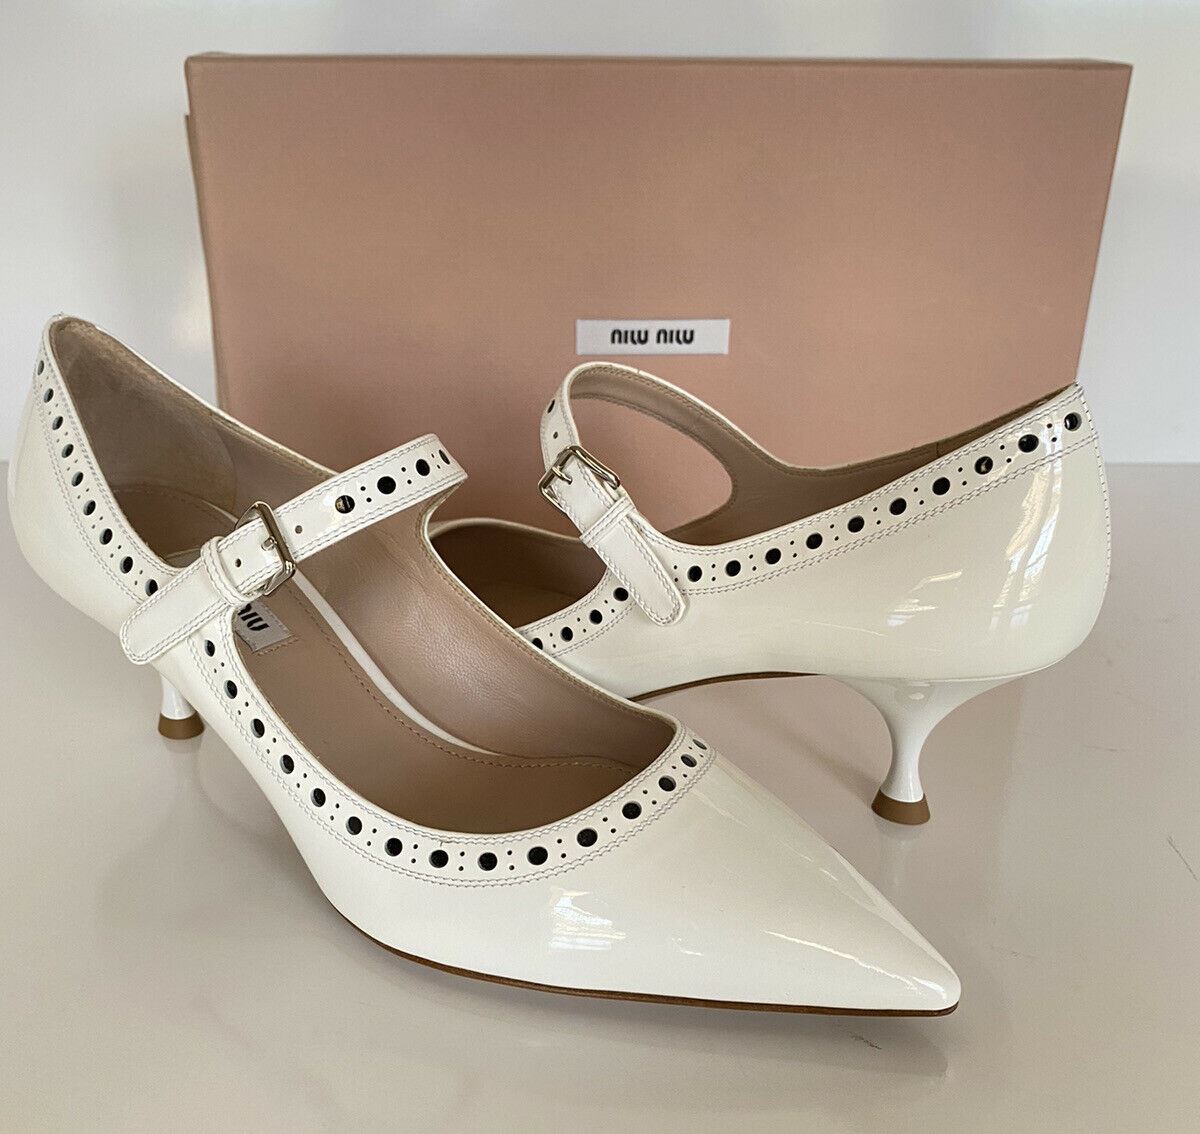 NIB MIU MIU PRADA Women's Patent Leather White Kitten Heel Pumps 8 US 5I868C